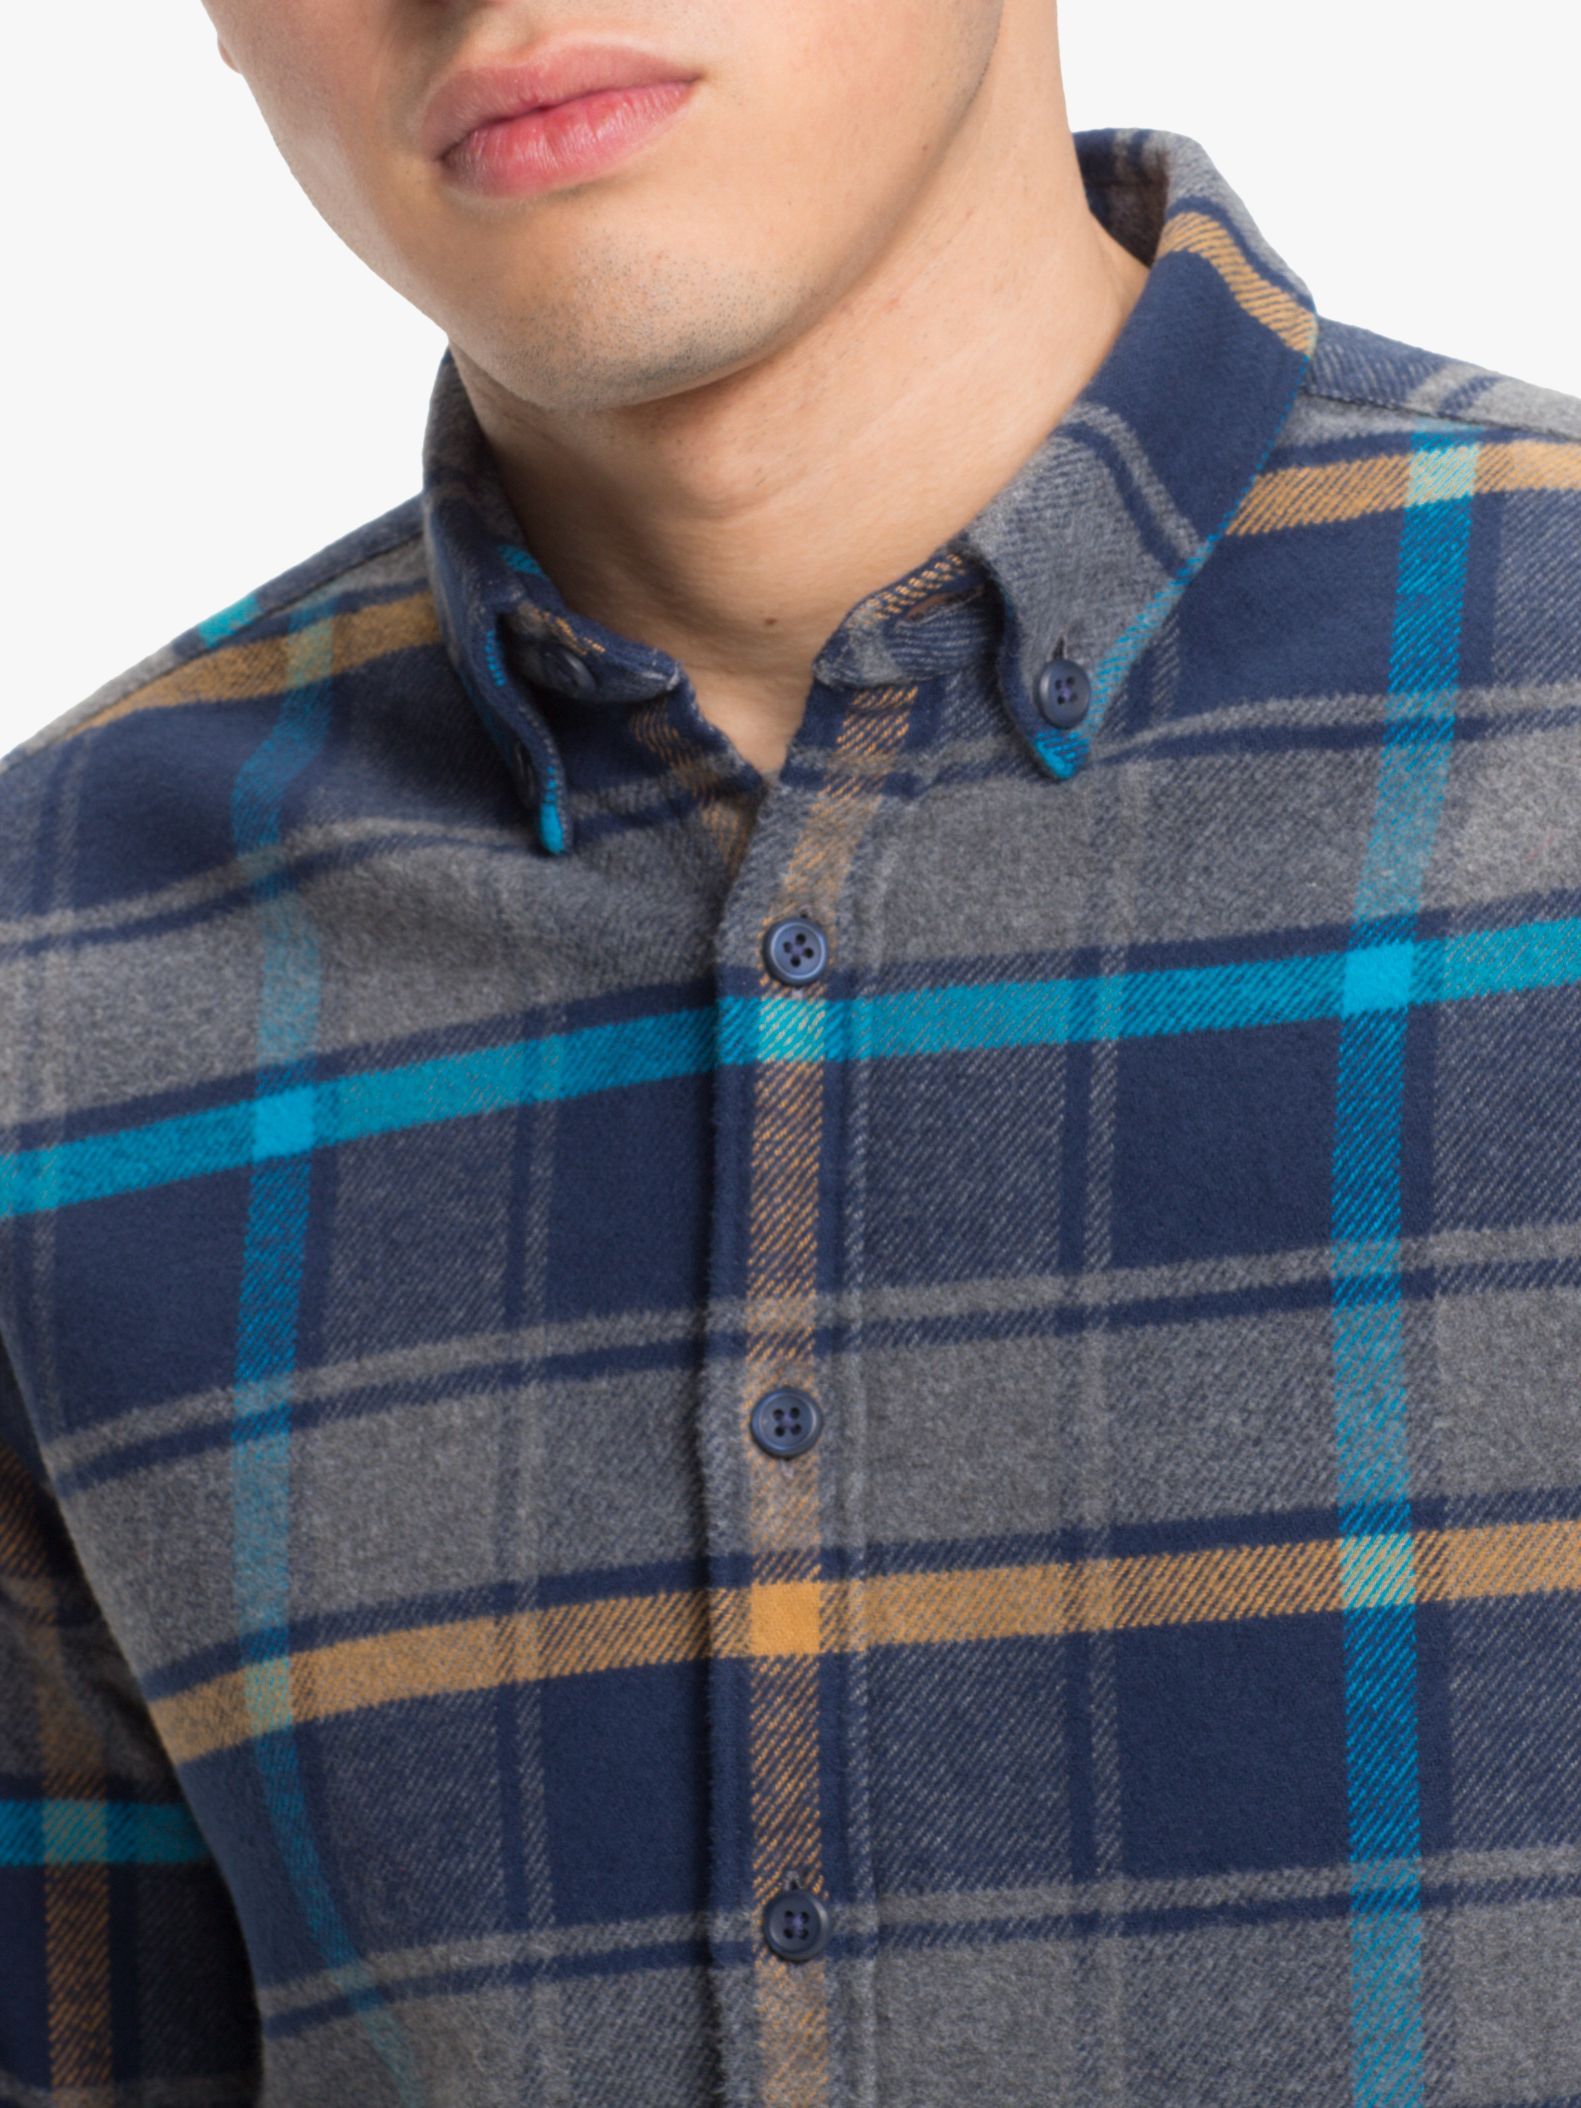 hilfiger flannel shirt